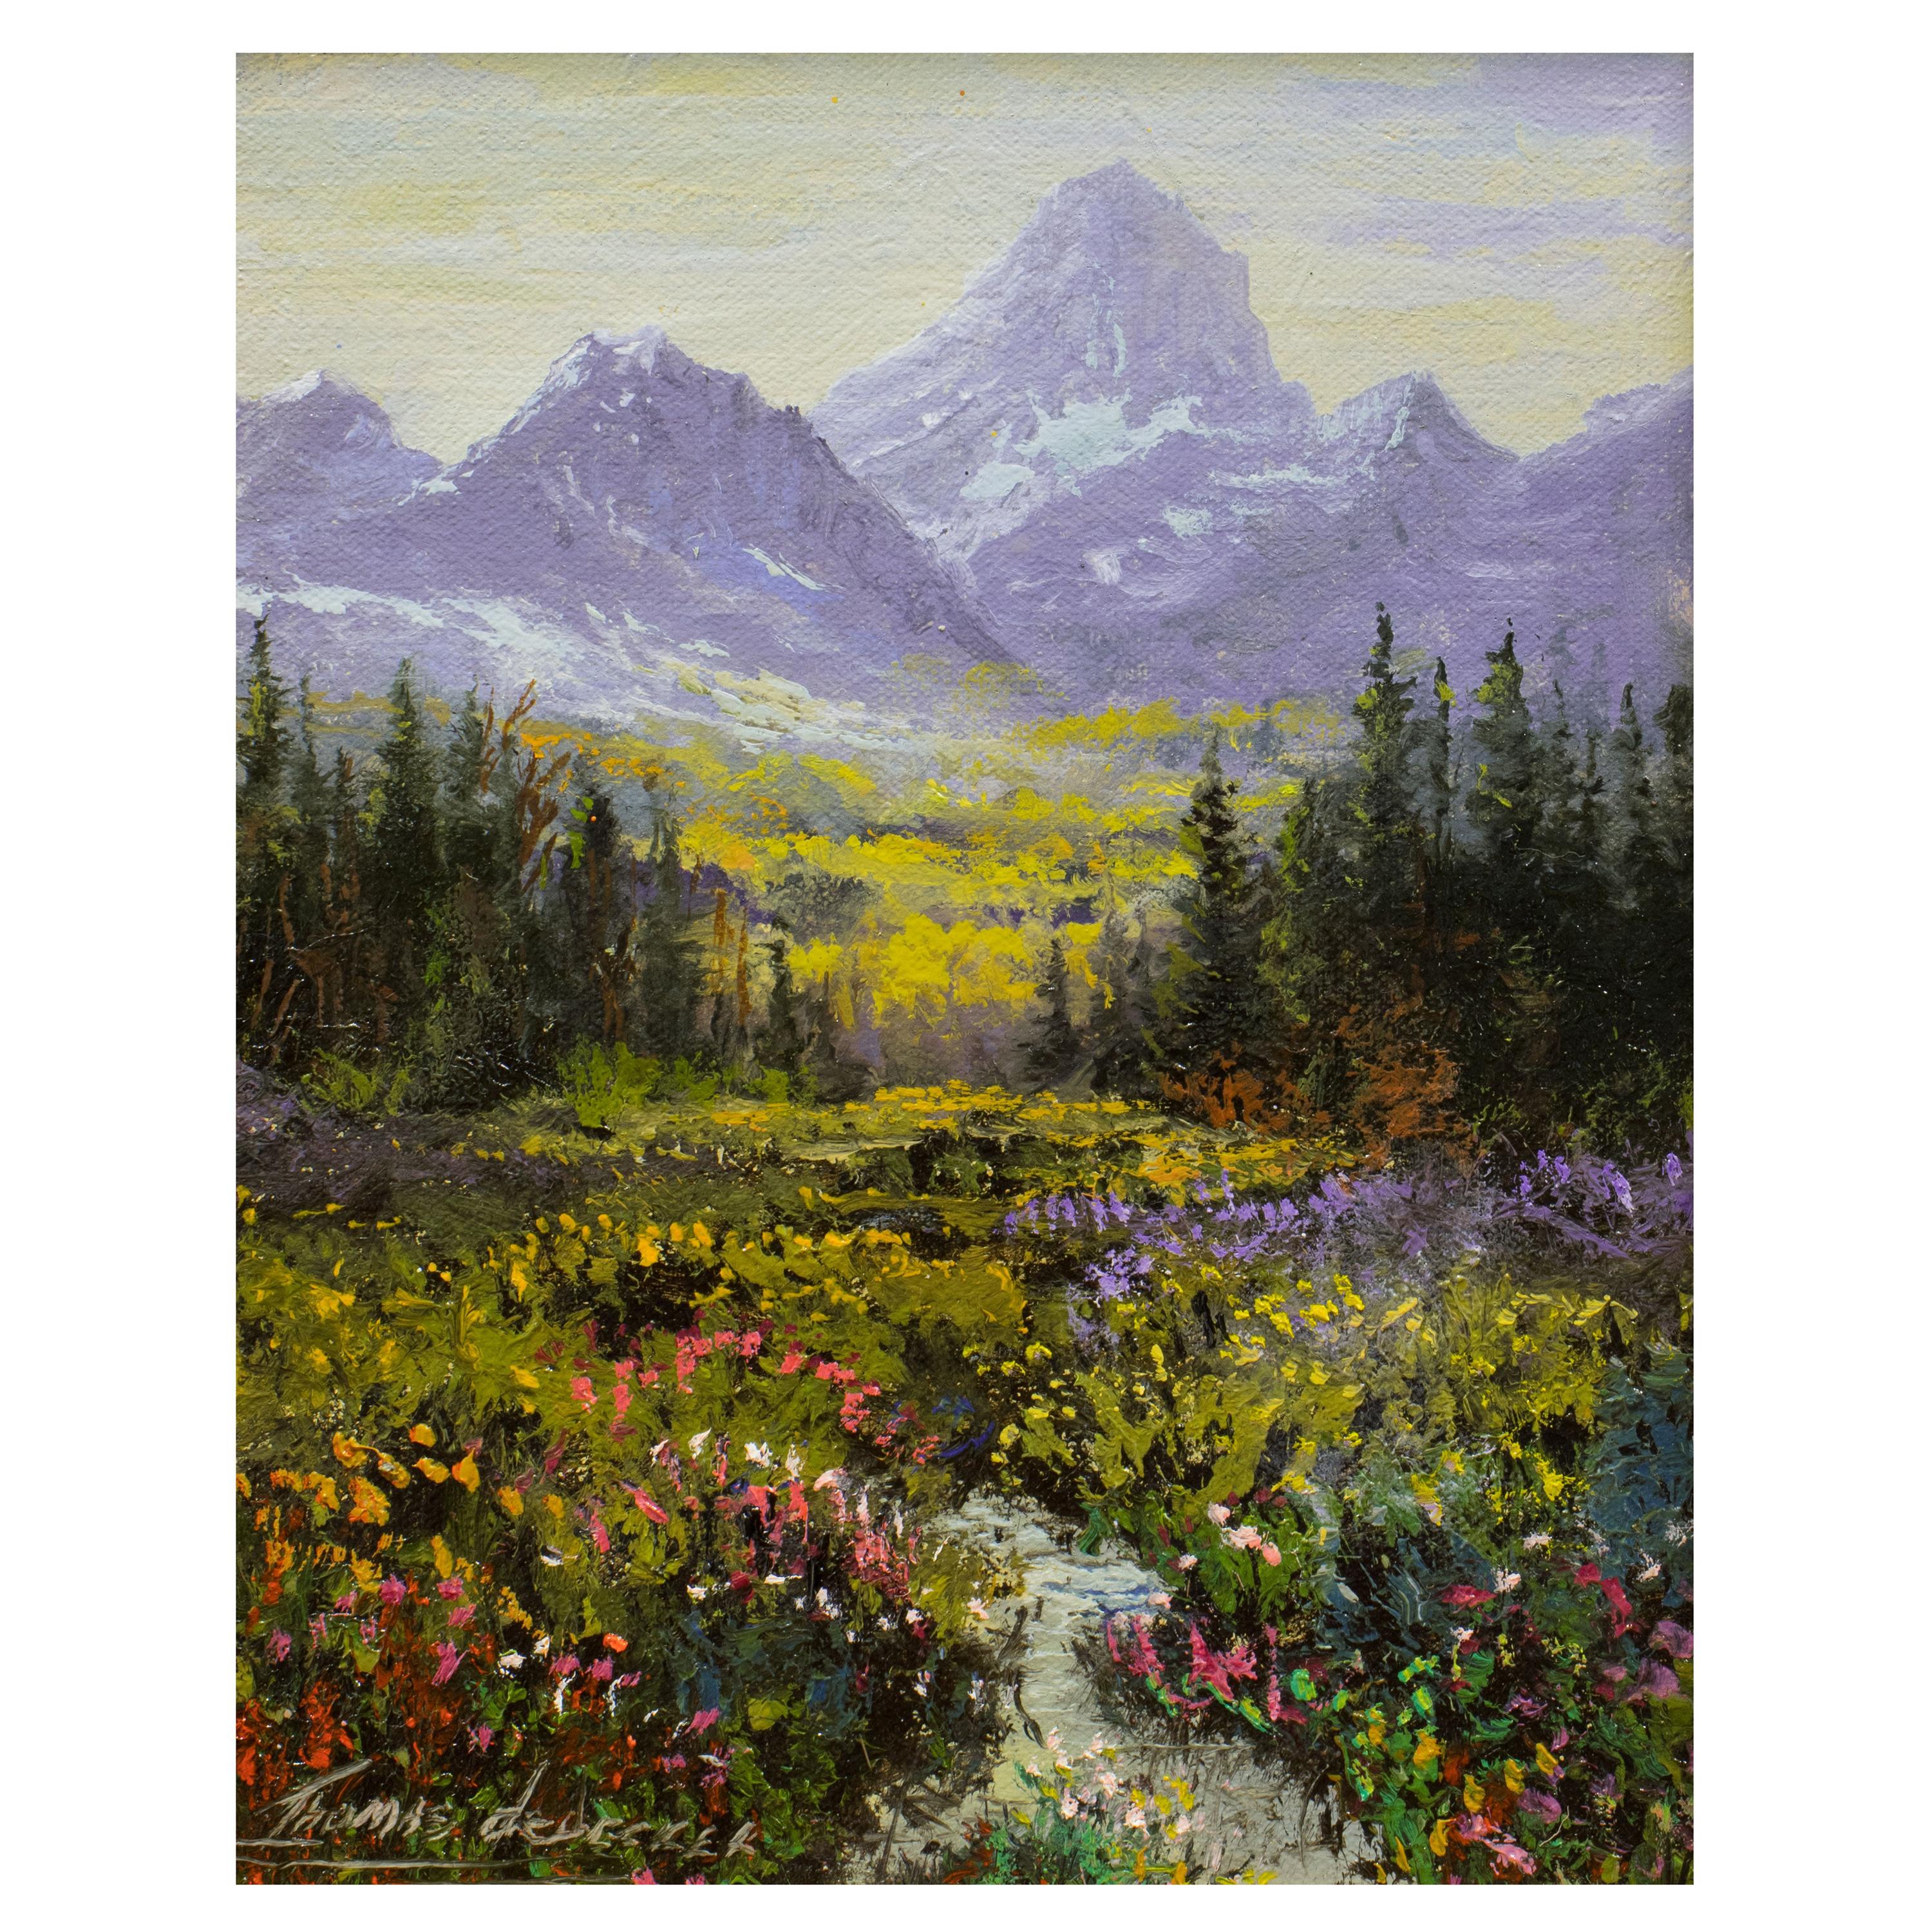 Original Painting "Spring Valley" by Thomas deDecker